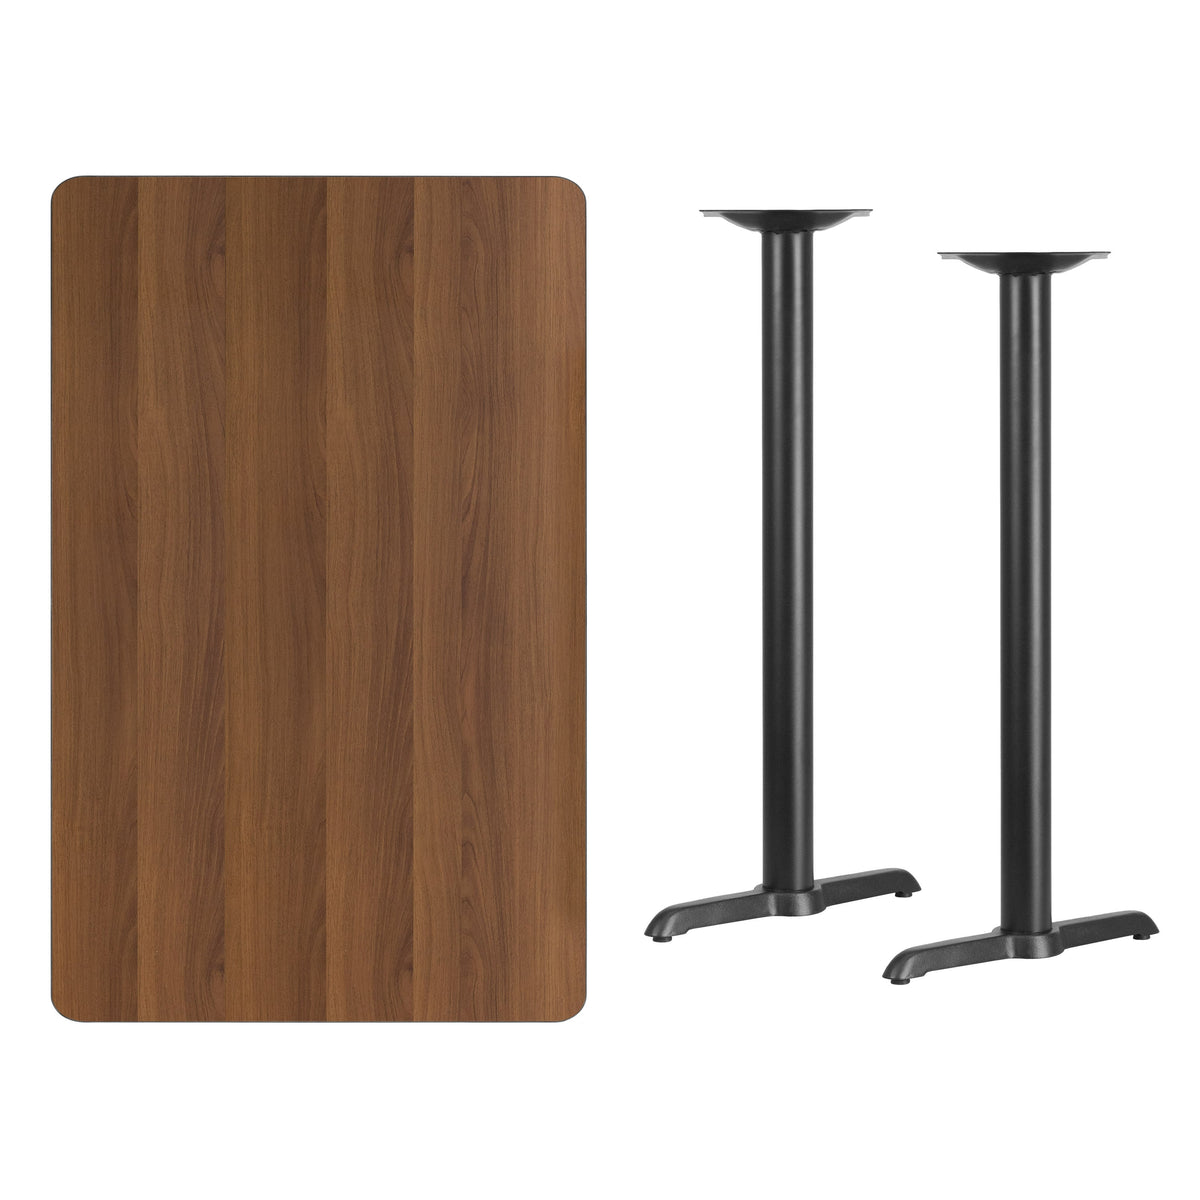 Walnut |#| 30x48 Rectangular Walnut Laminate Table Top & 5inch x 22inch Bar Height Table Bases